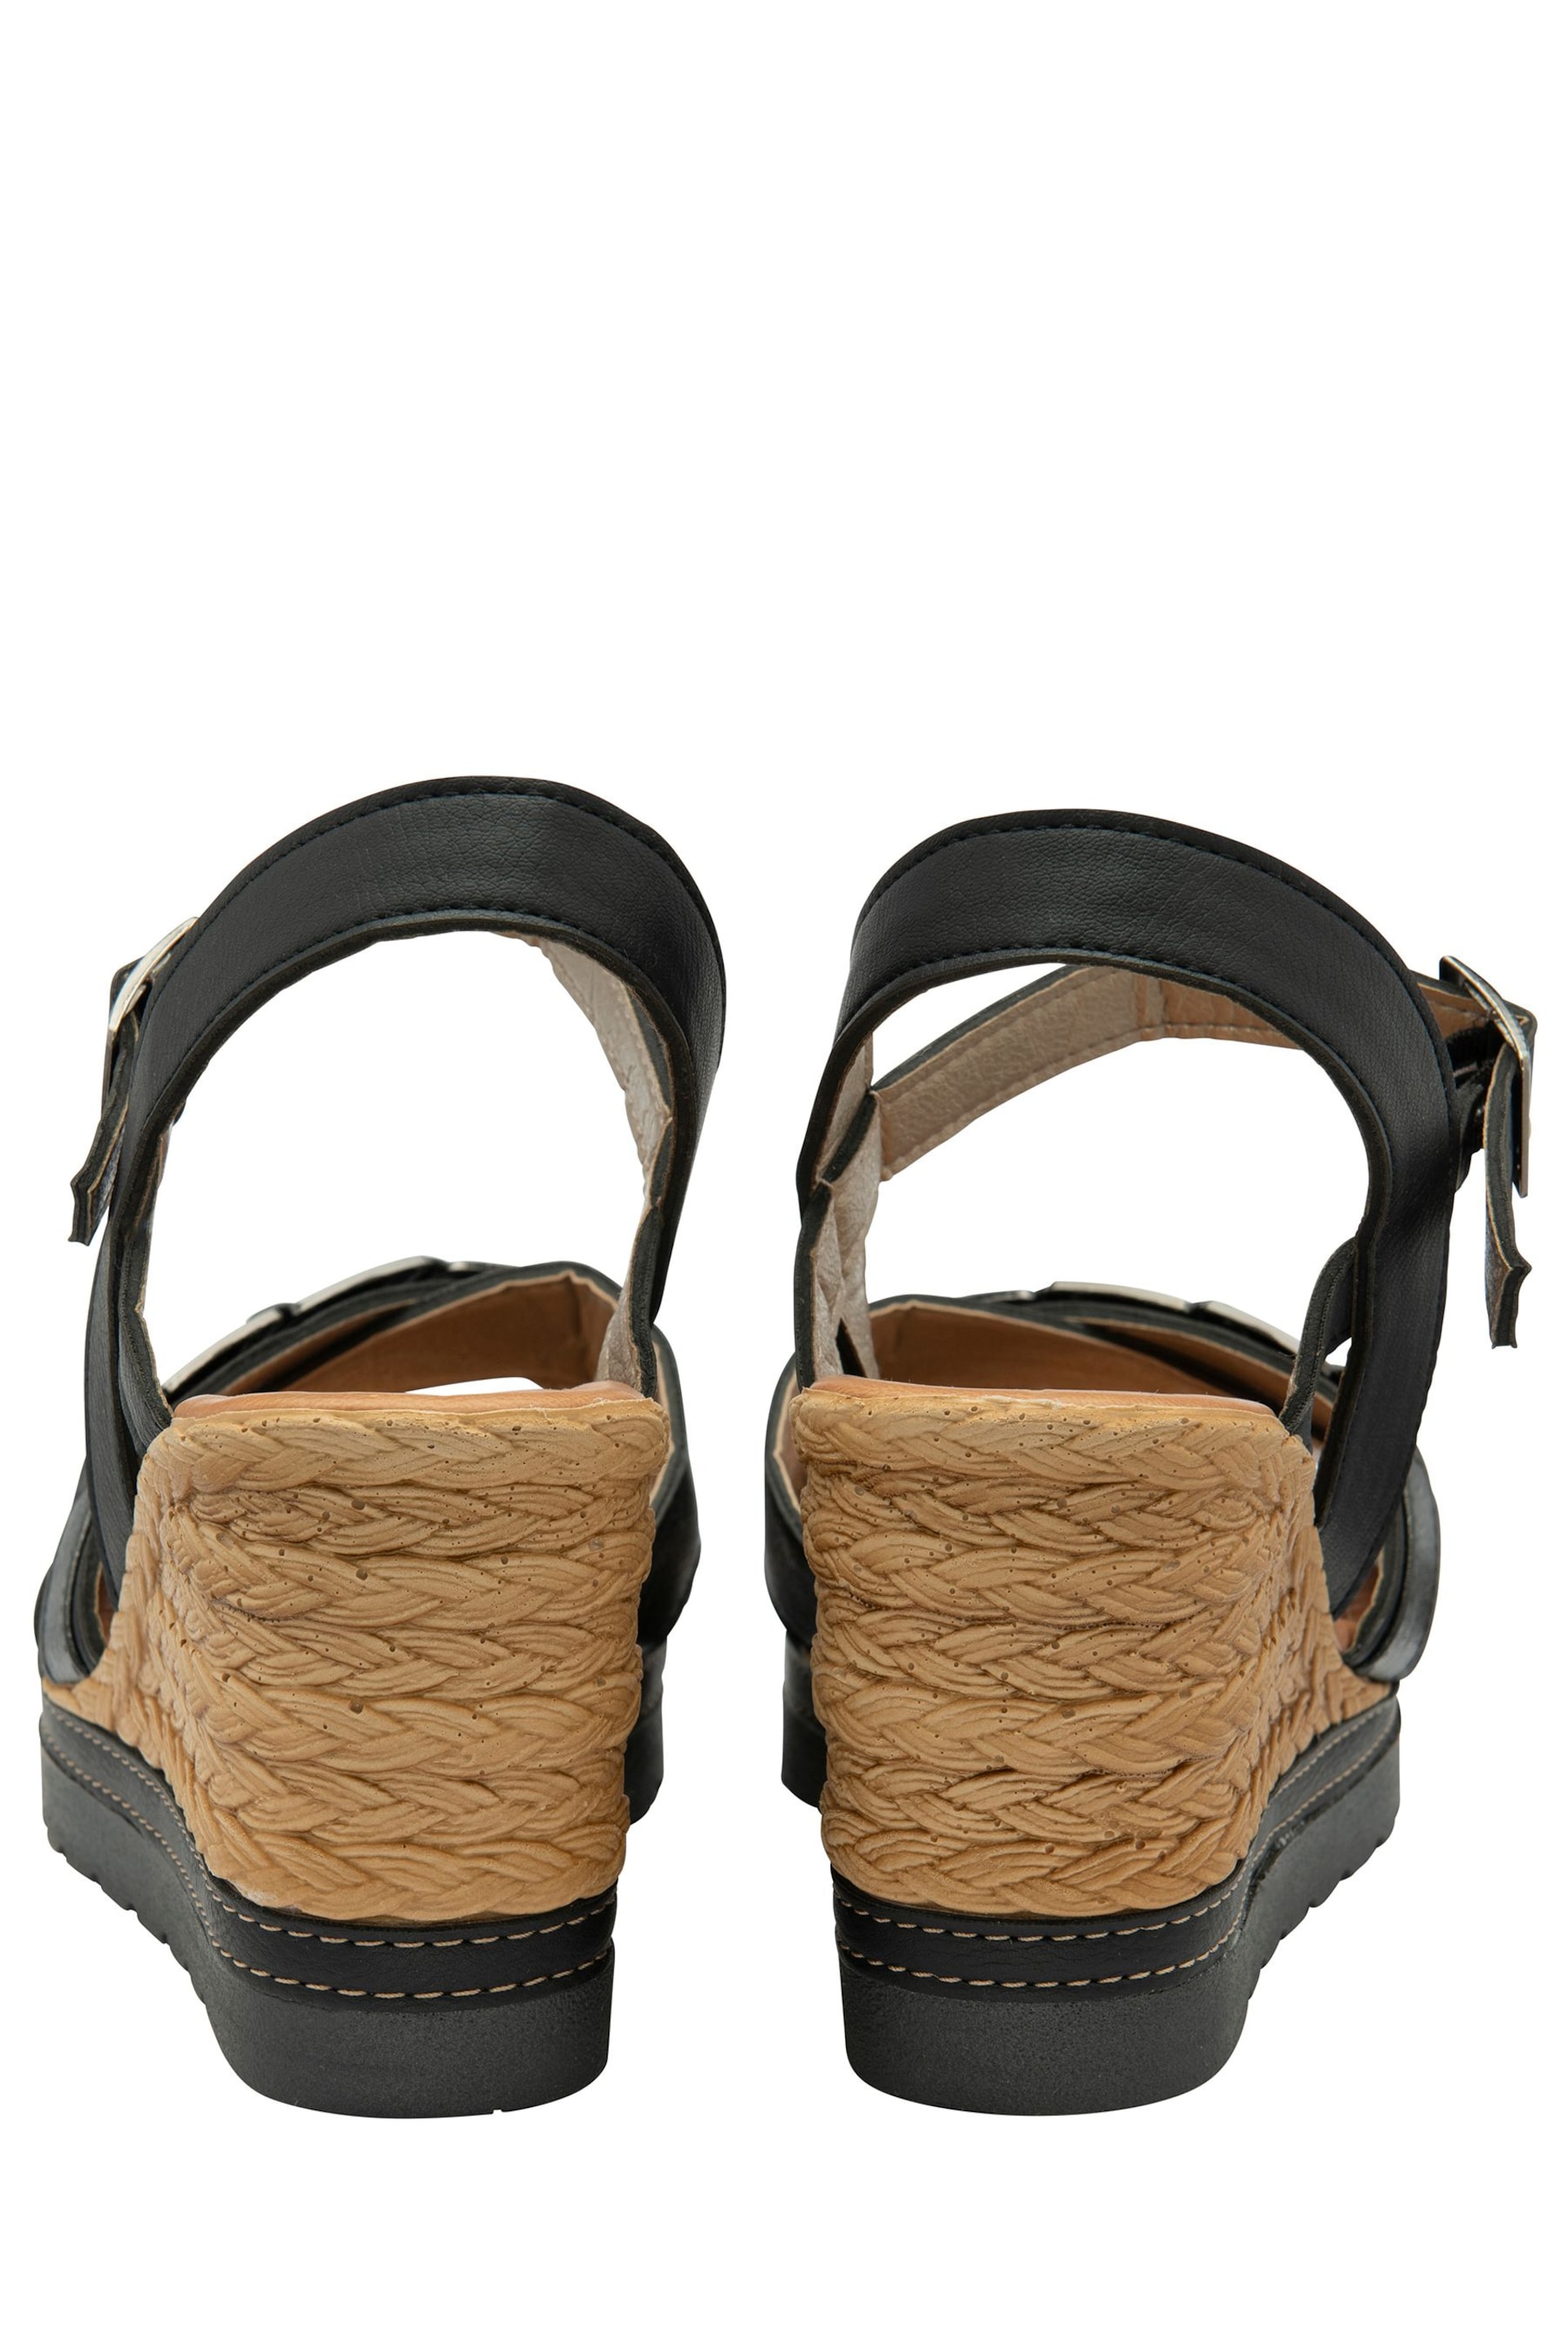 Lotus Black Casual Wedge Sandals - Image 3 of 4